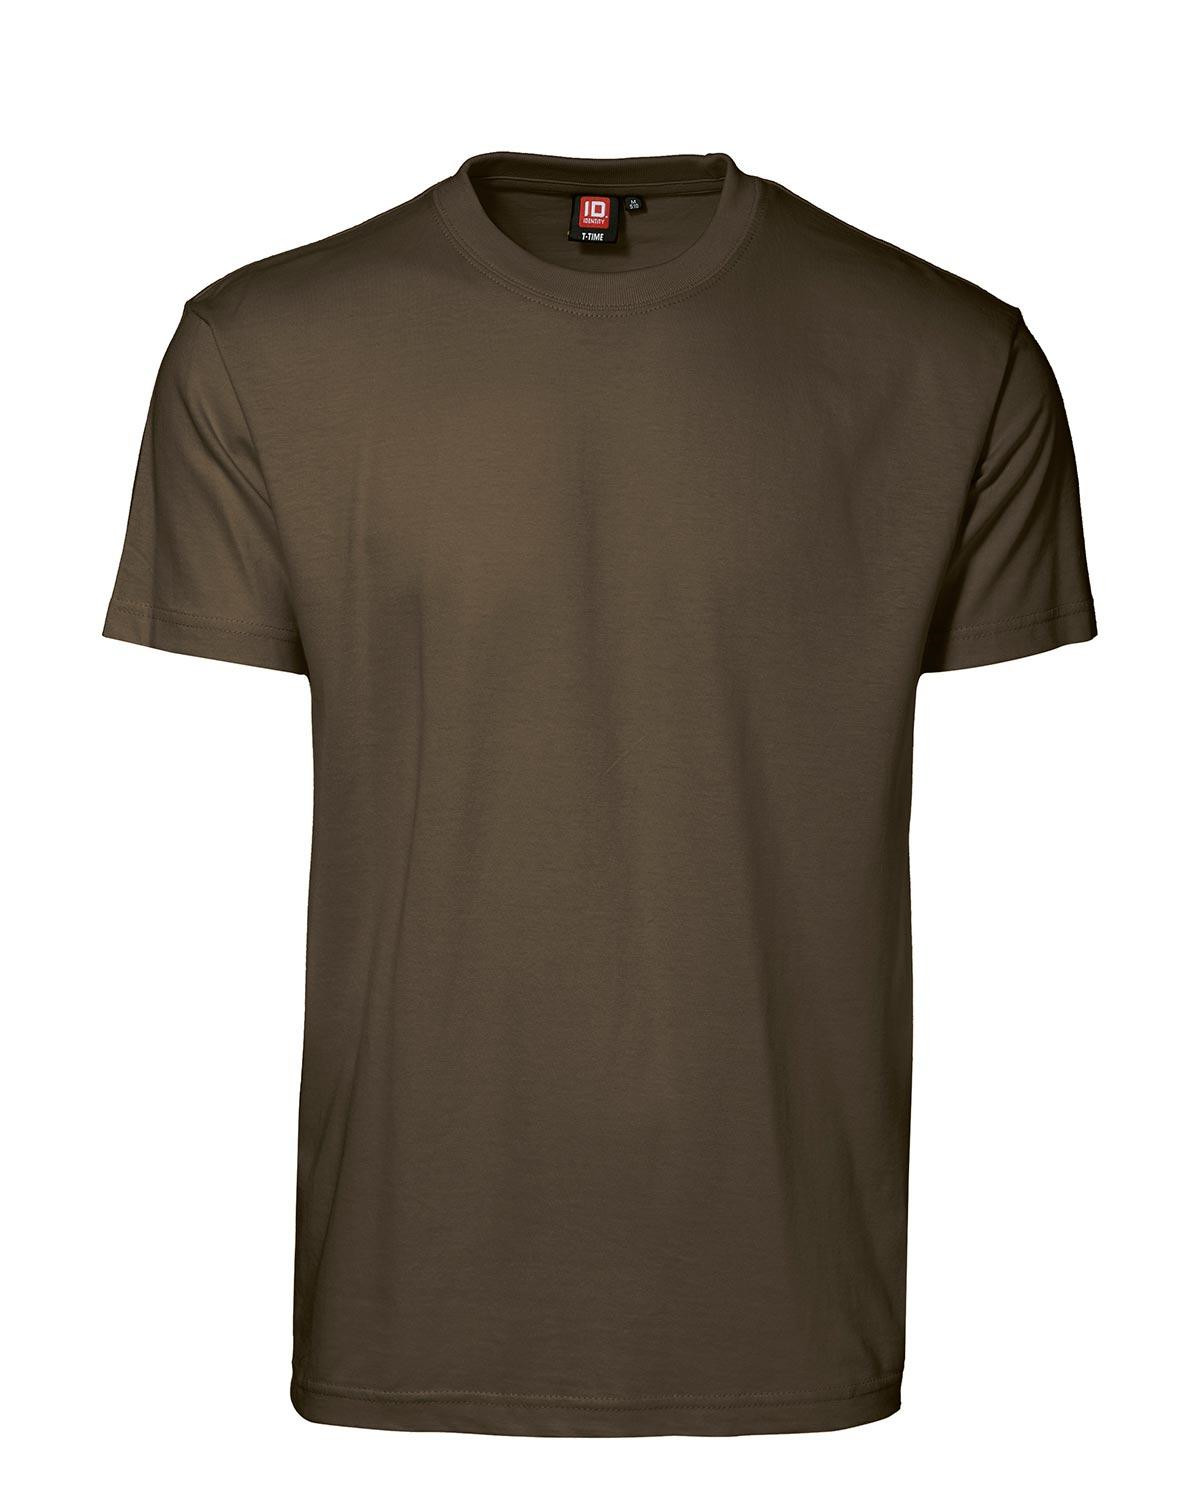 Billede af ID T-Time T-shirt, rund hals (Oliven, XL) hos Army Star